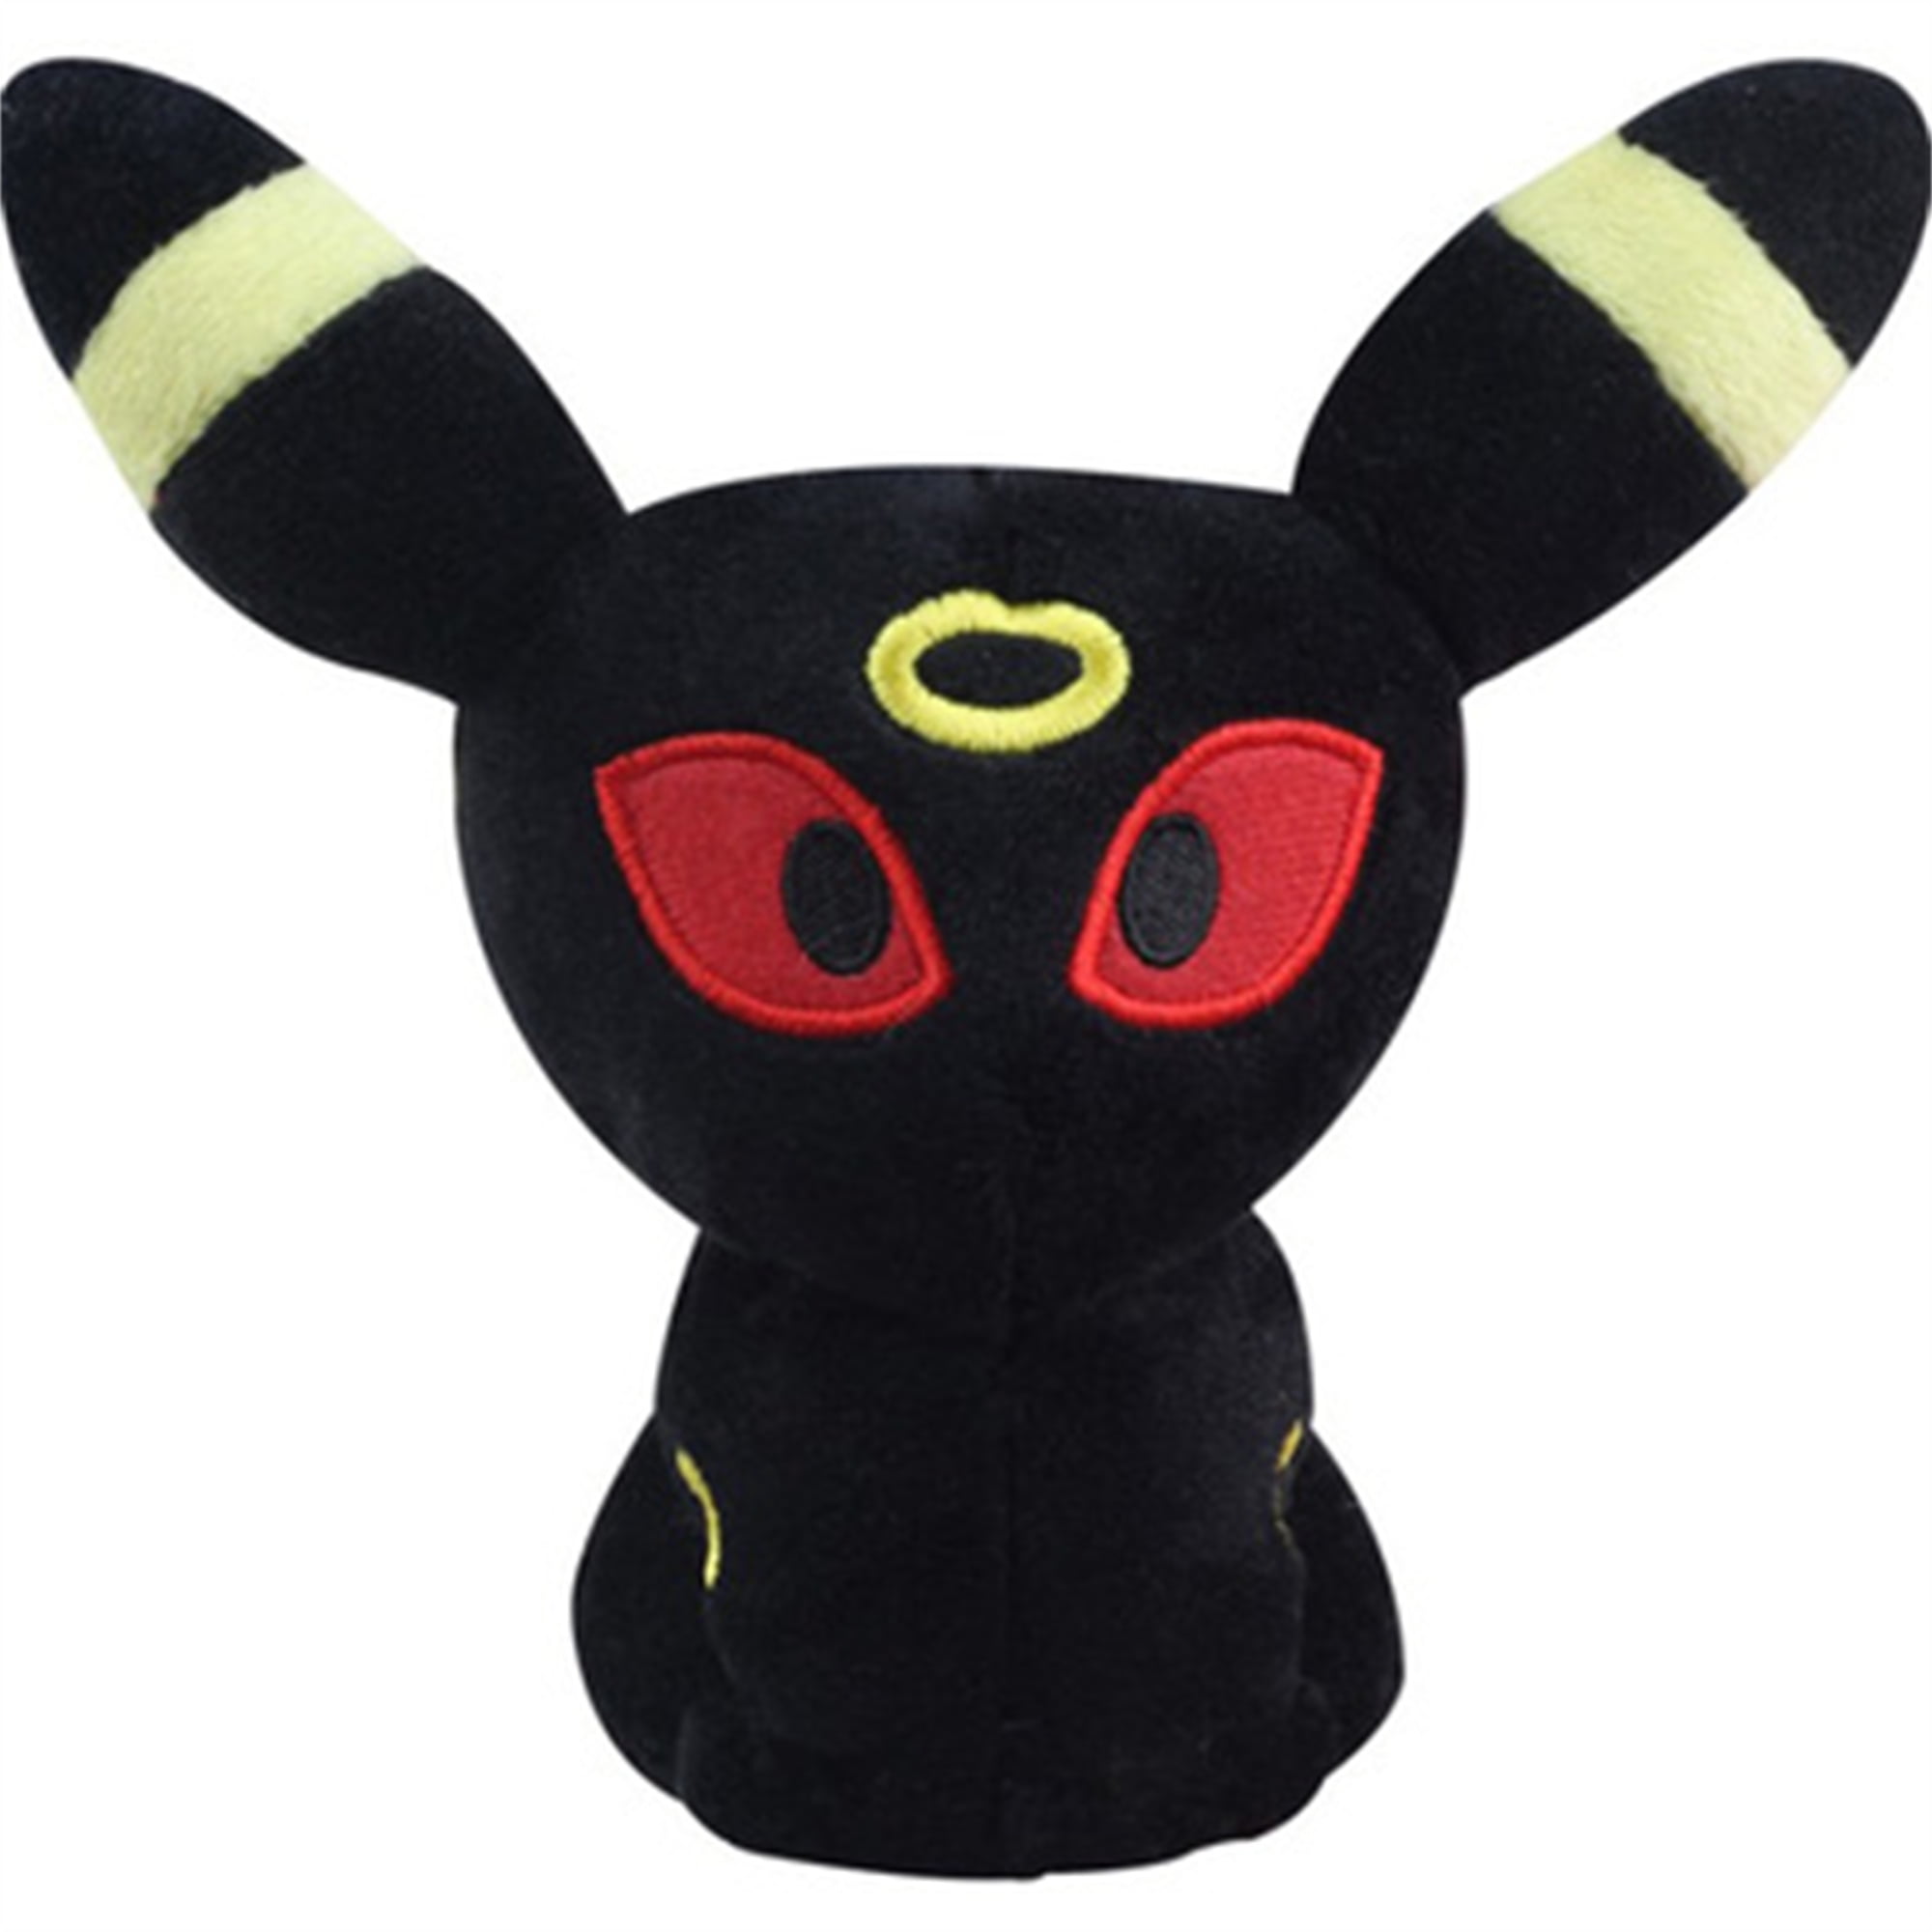 Umbreon Moonlight  Pokemon Blacky Plush Toy Stuffed Animal Soft figure Doll 7" 